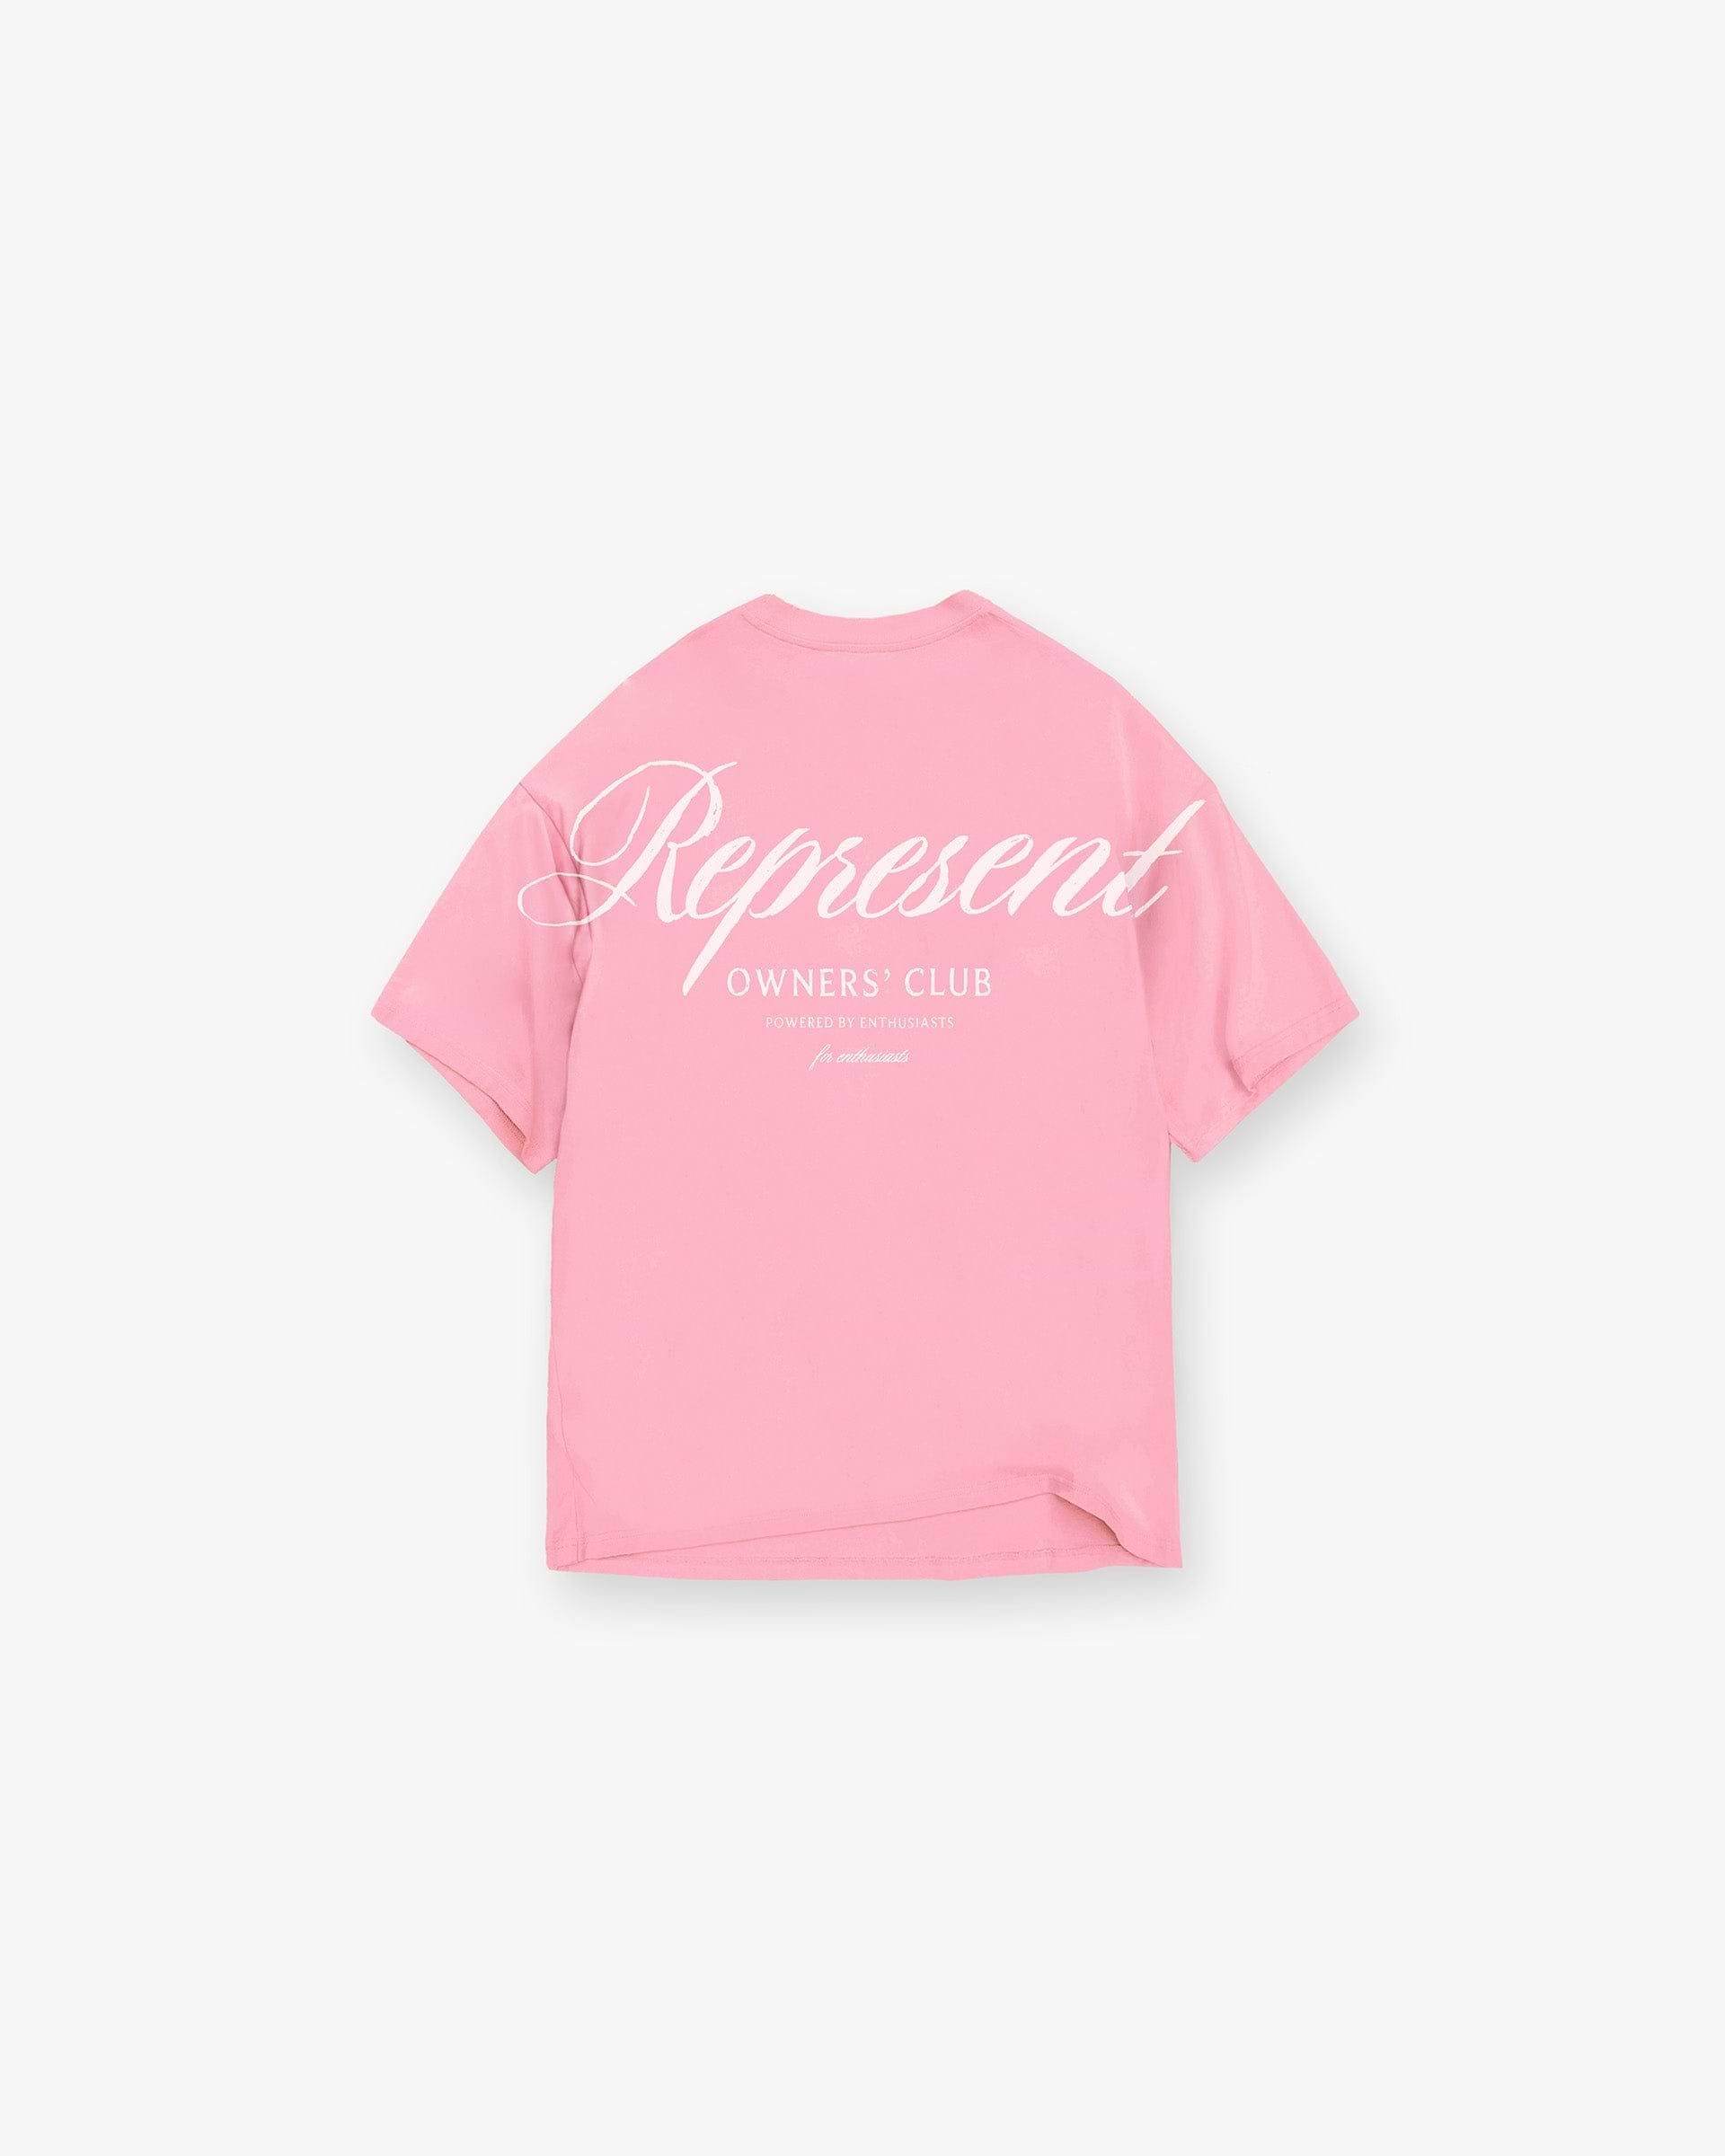 Represent Owners Club Script T-Shirt - Pink